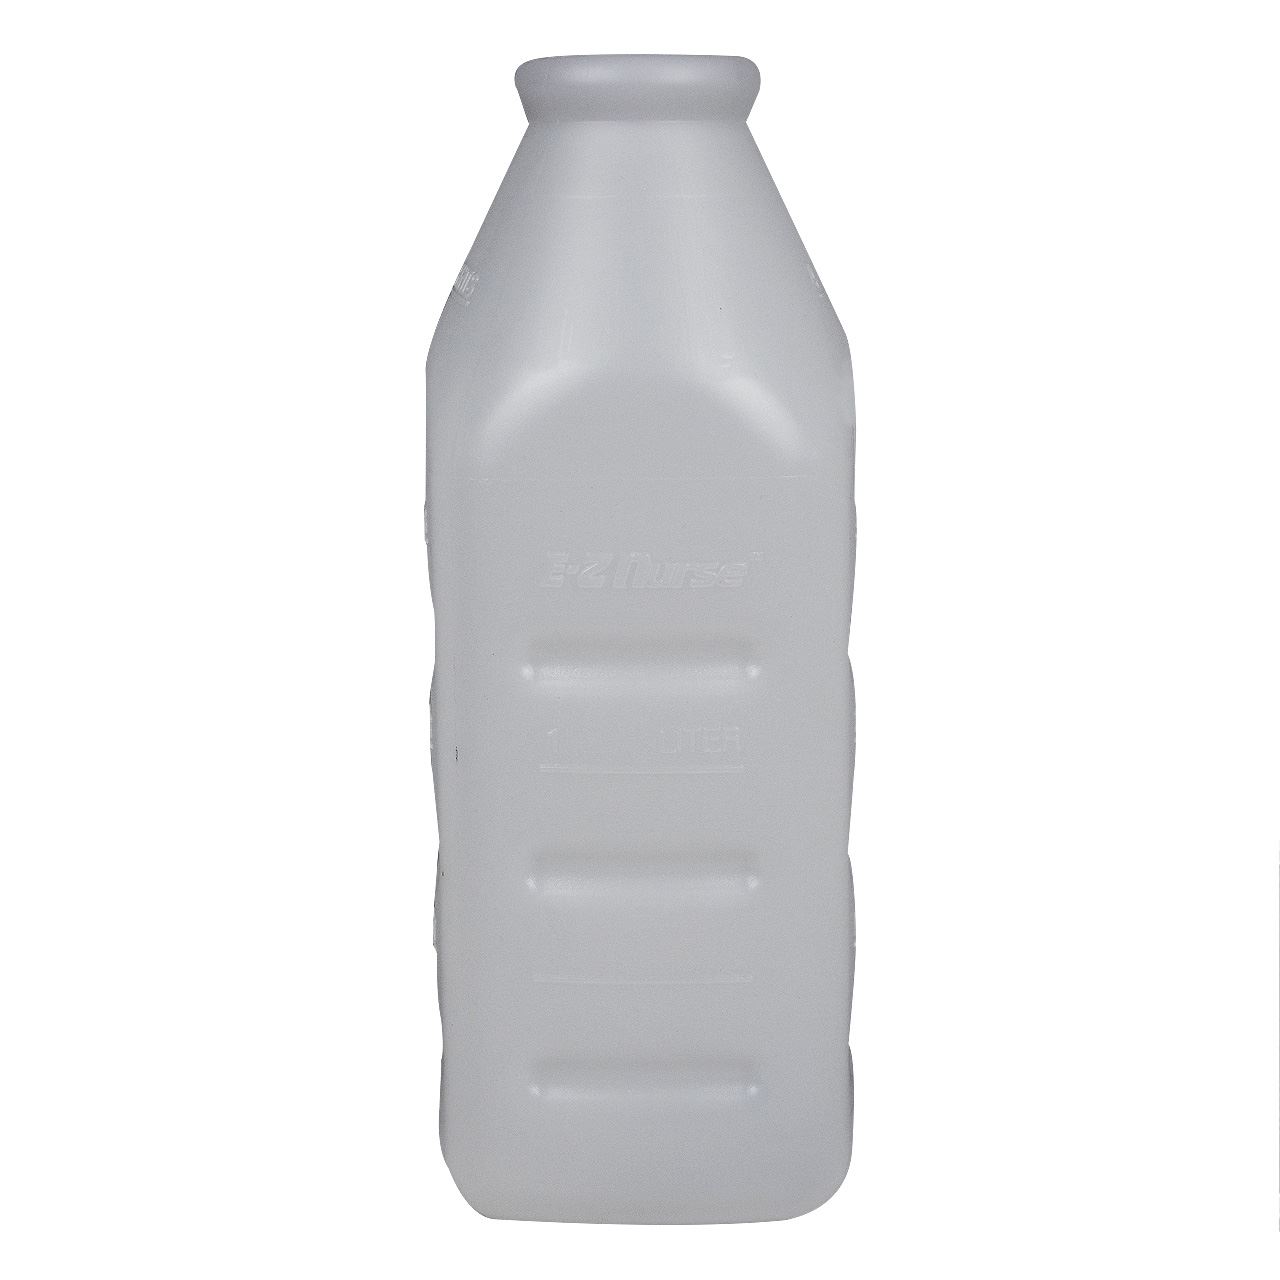 2-Quart Snap Bottle Only - Case of 12